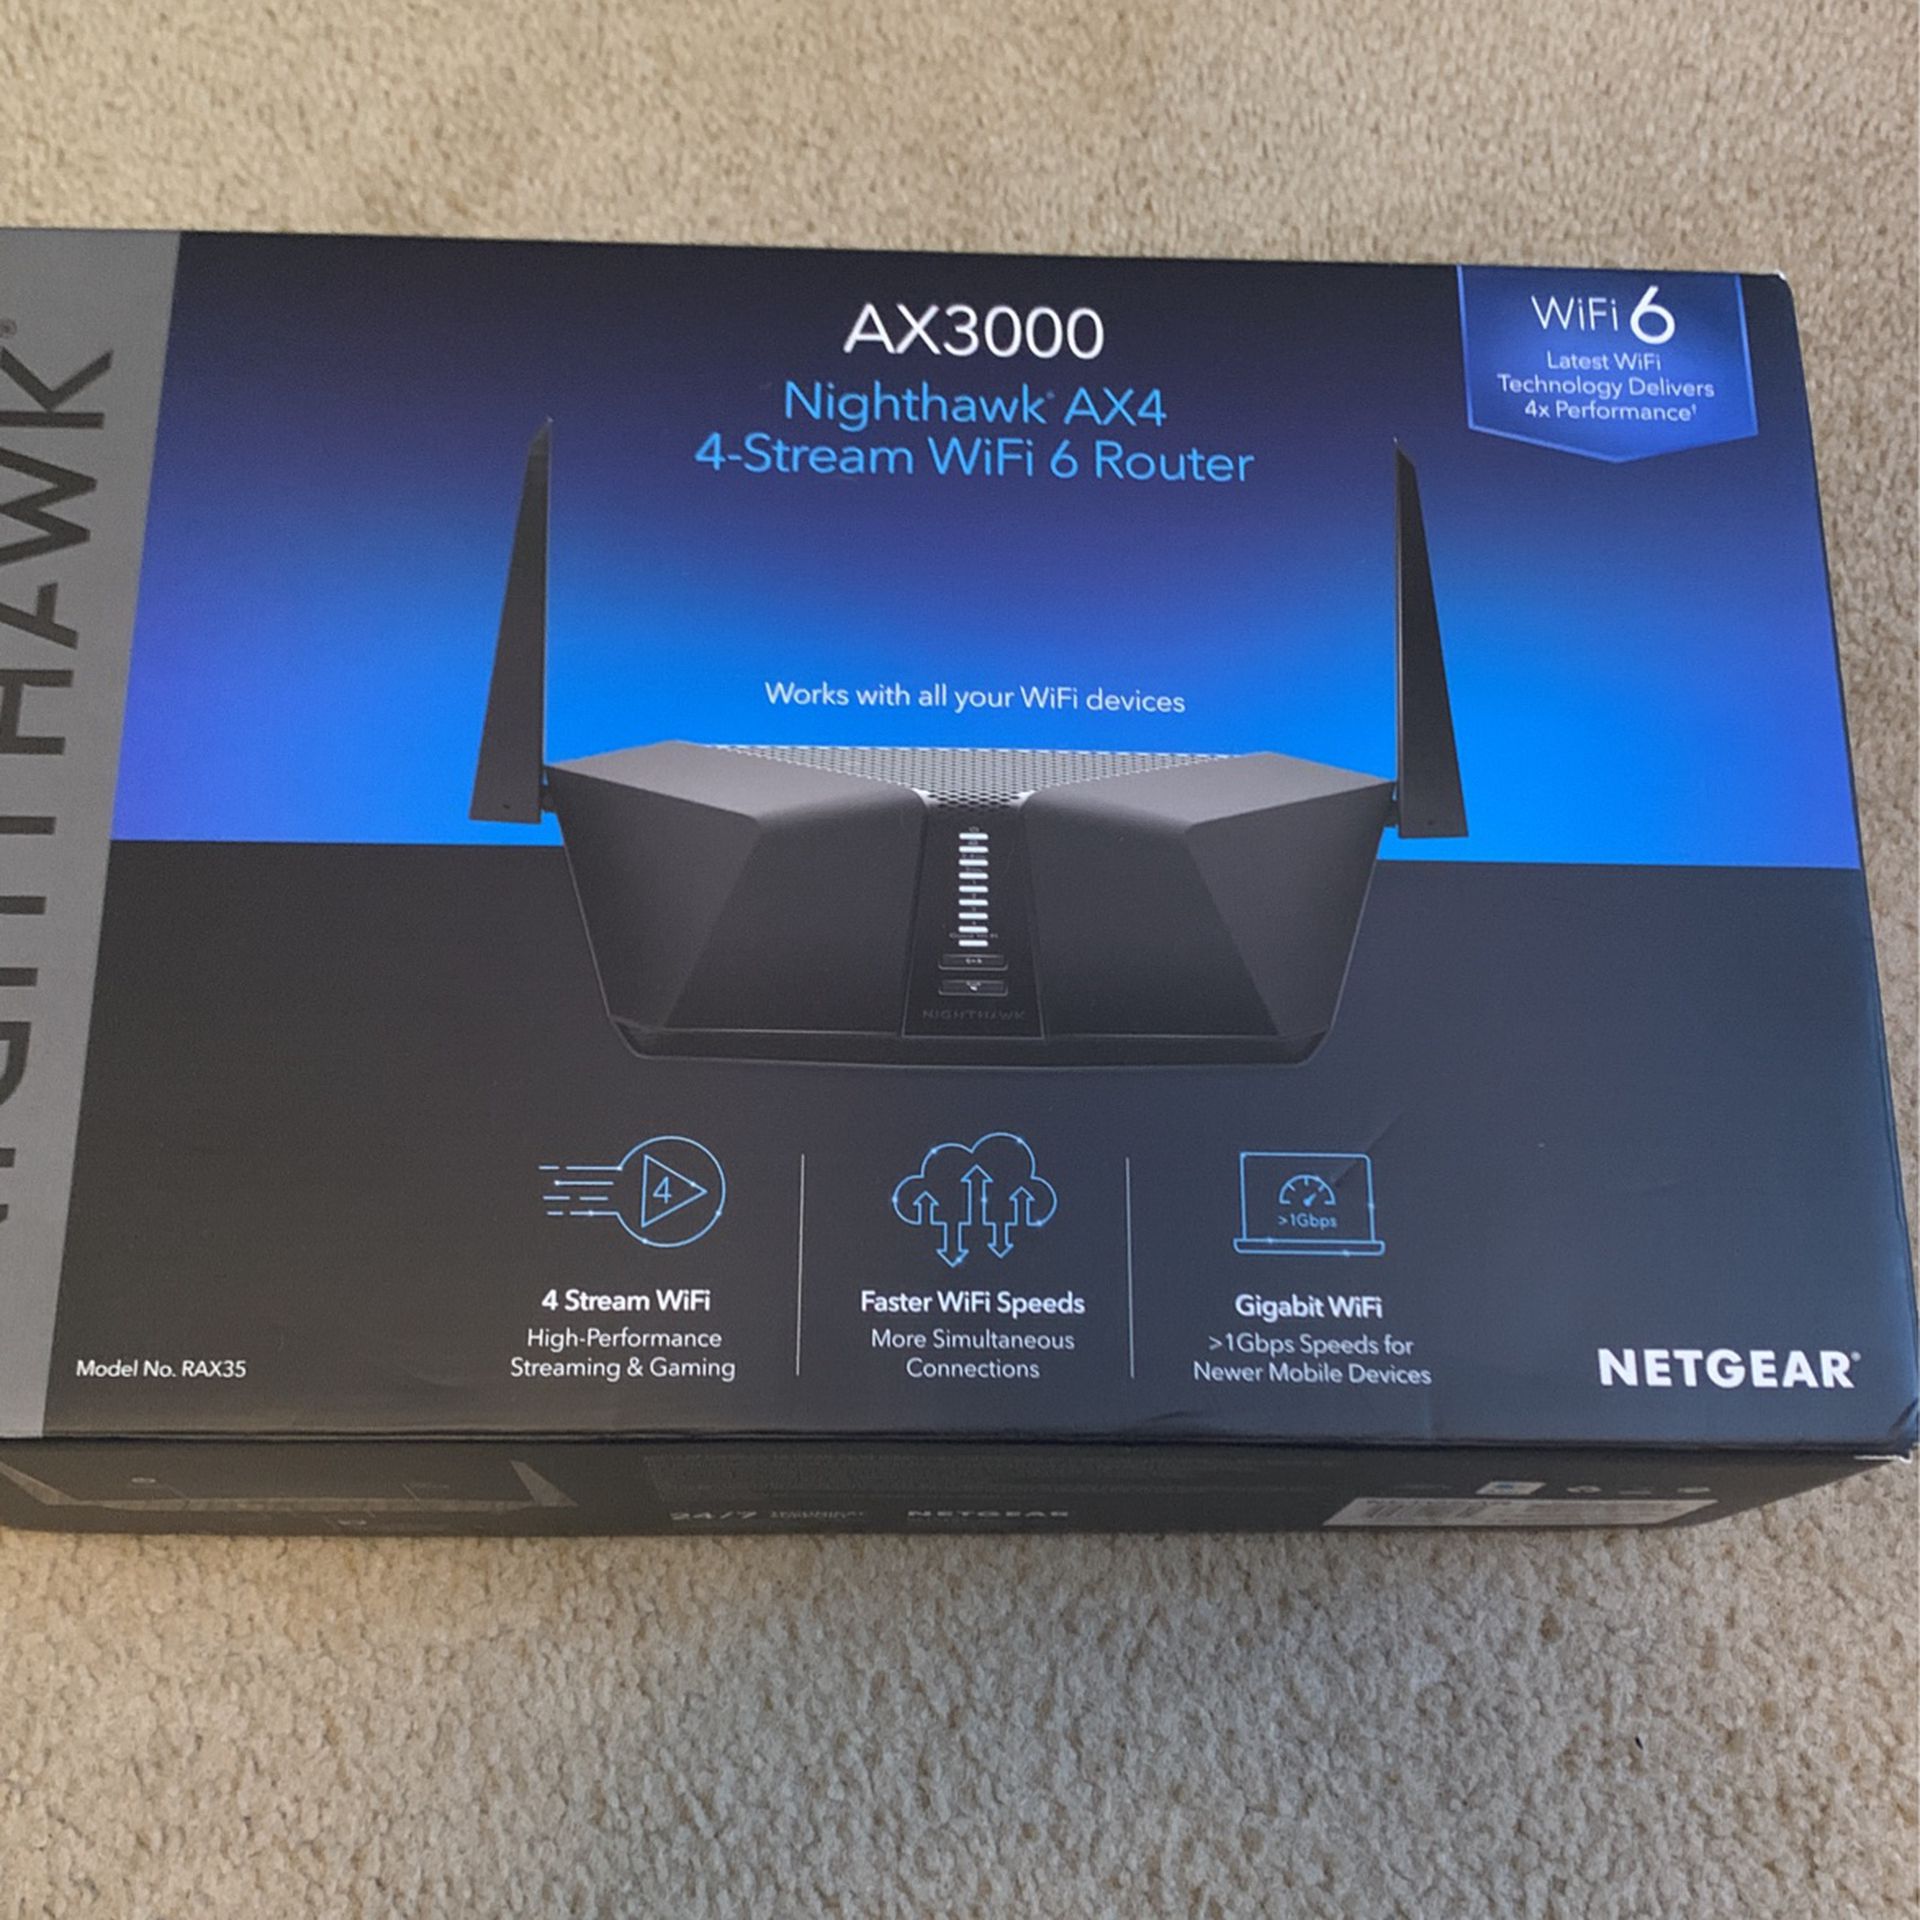 Nighthawk AX4 (AX 3000) WiFi6 Router